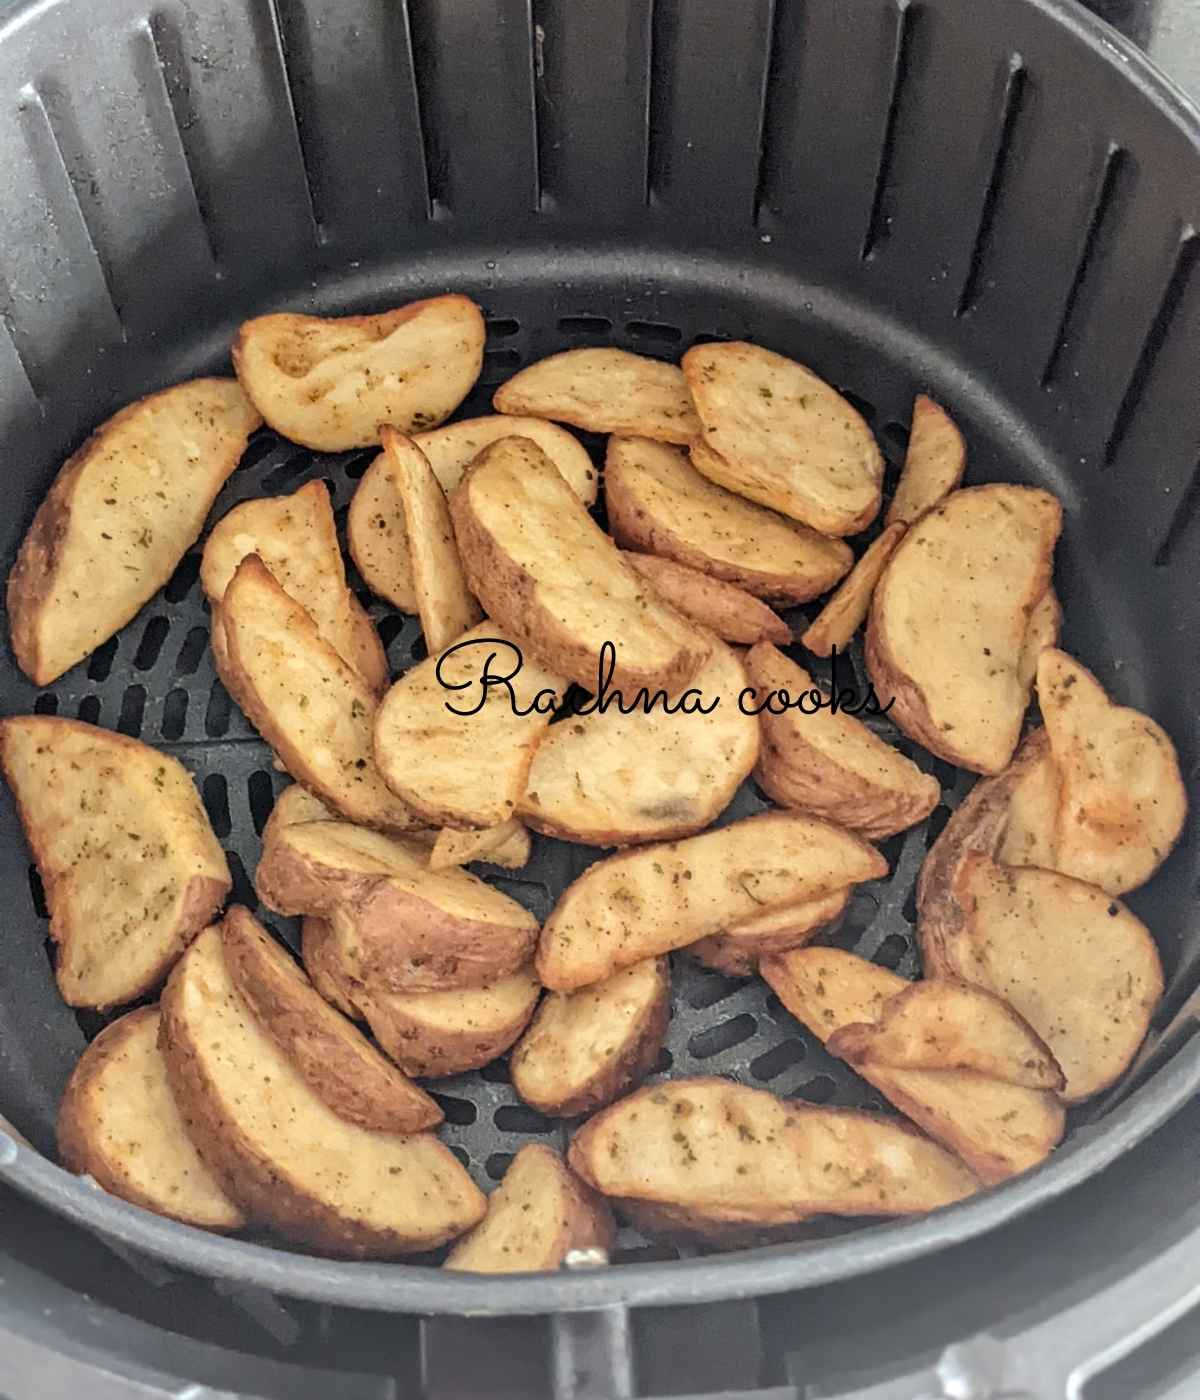 Frozen potato wedges in air fryer basket.